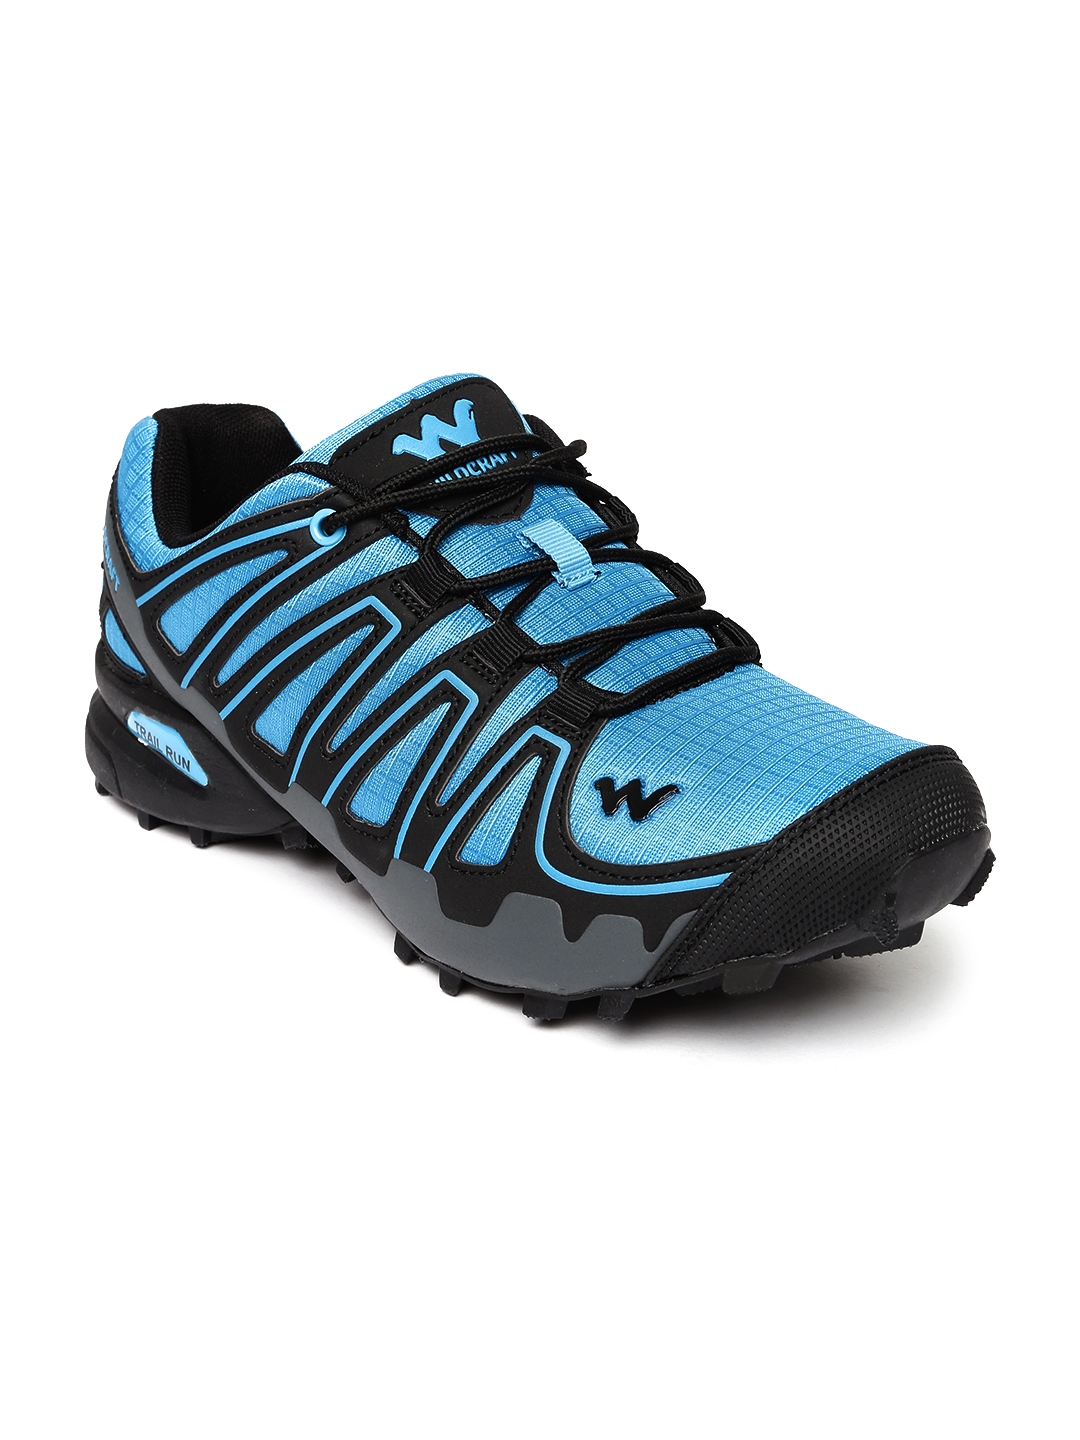 wildcraft running shoes